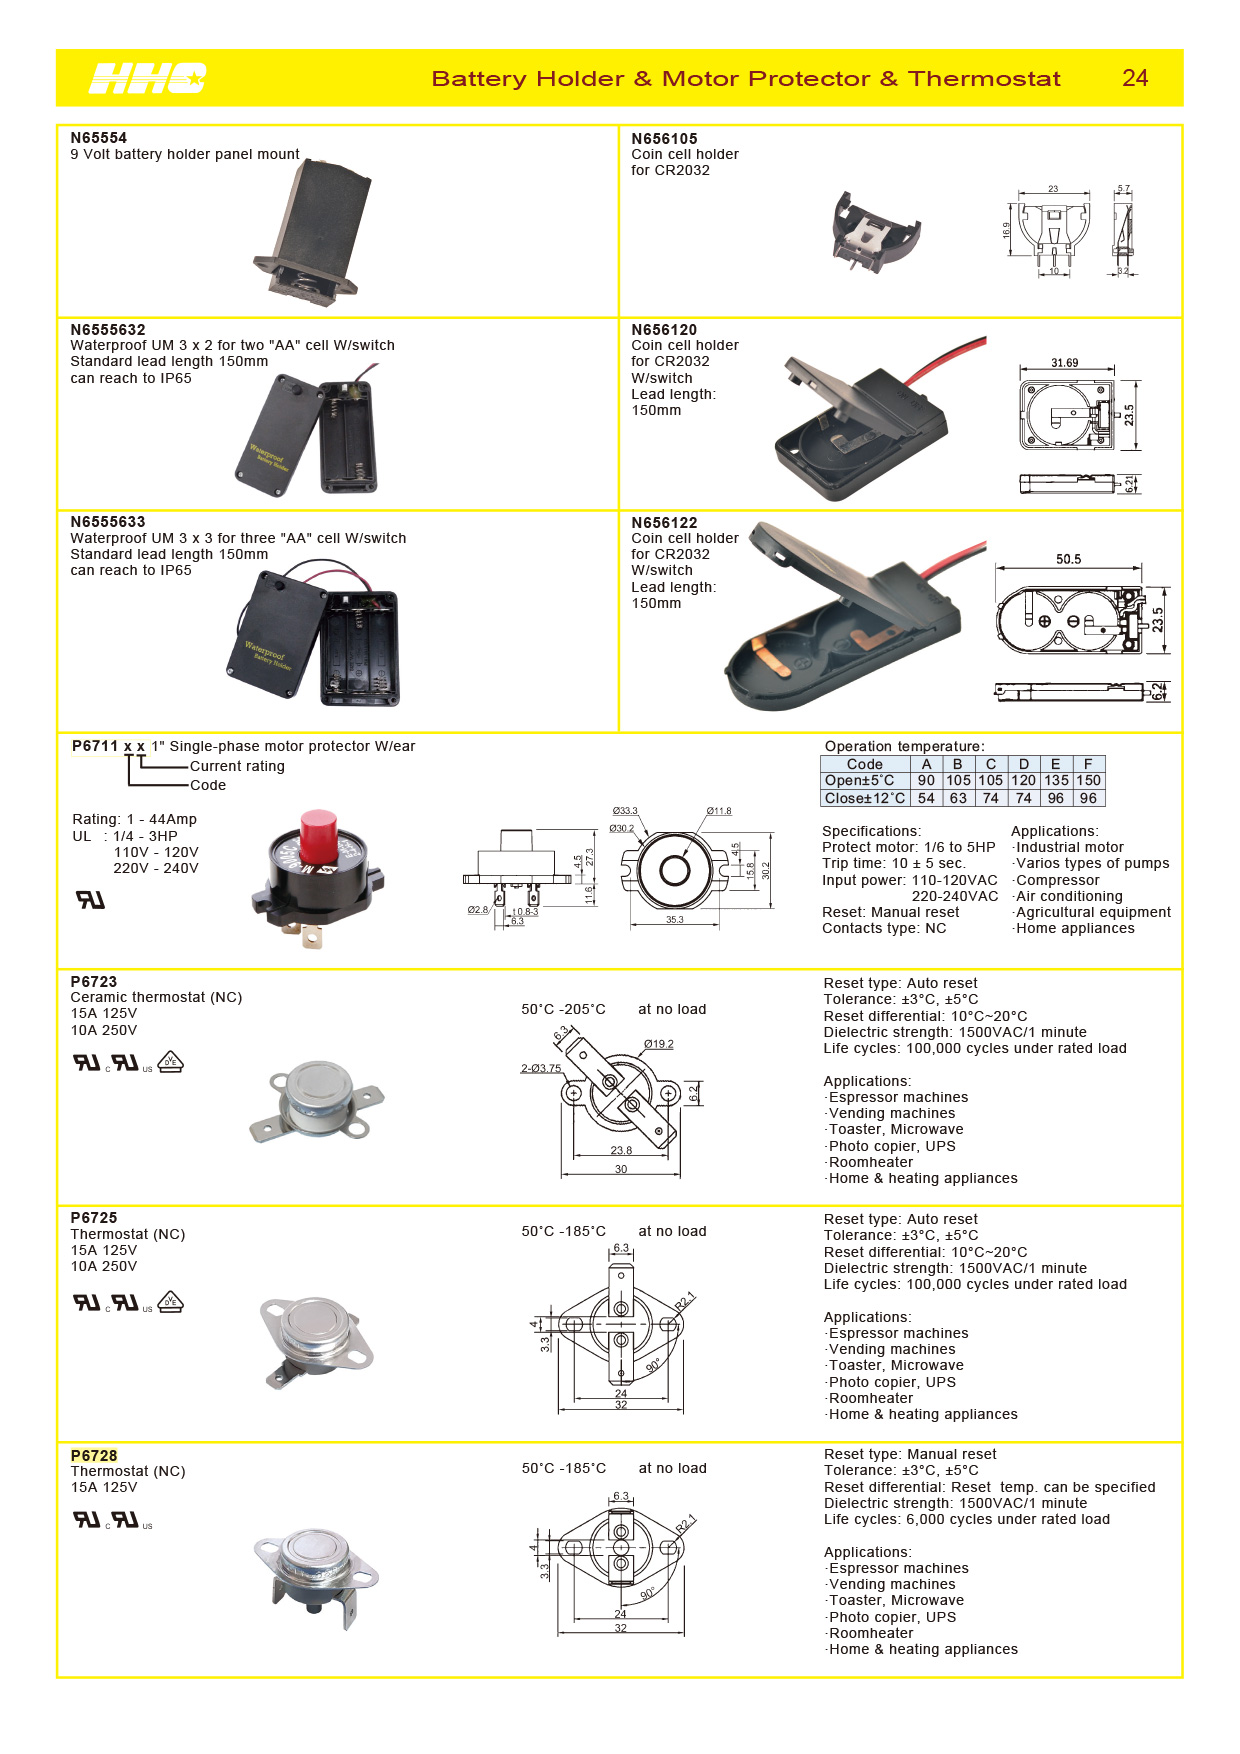 Shallin Electronics | Quality Electronic Components